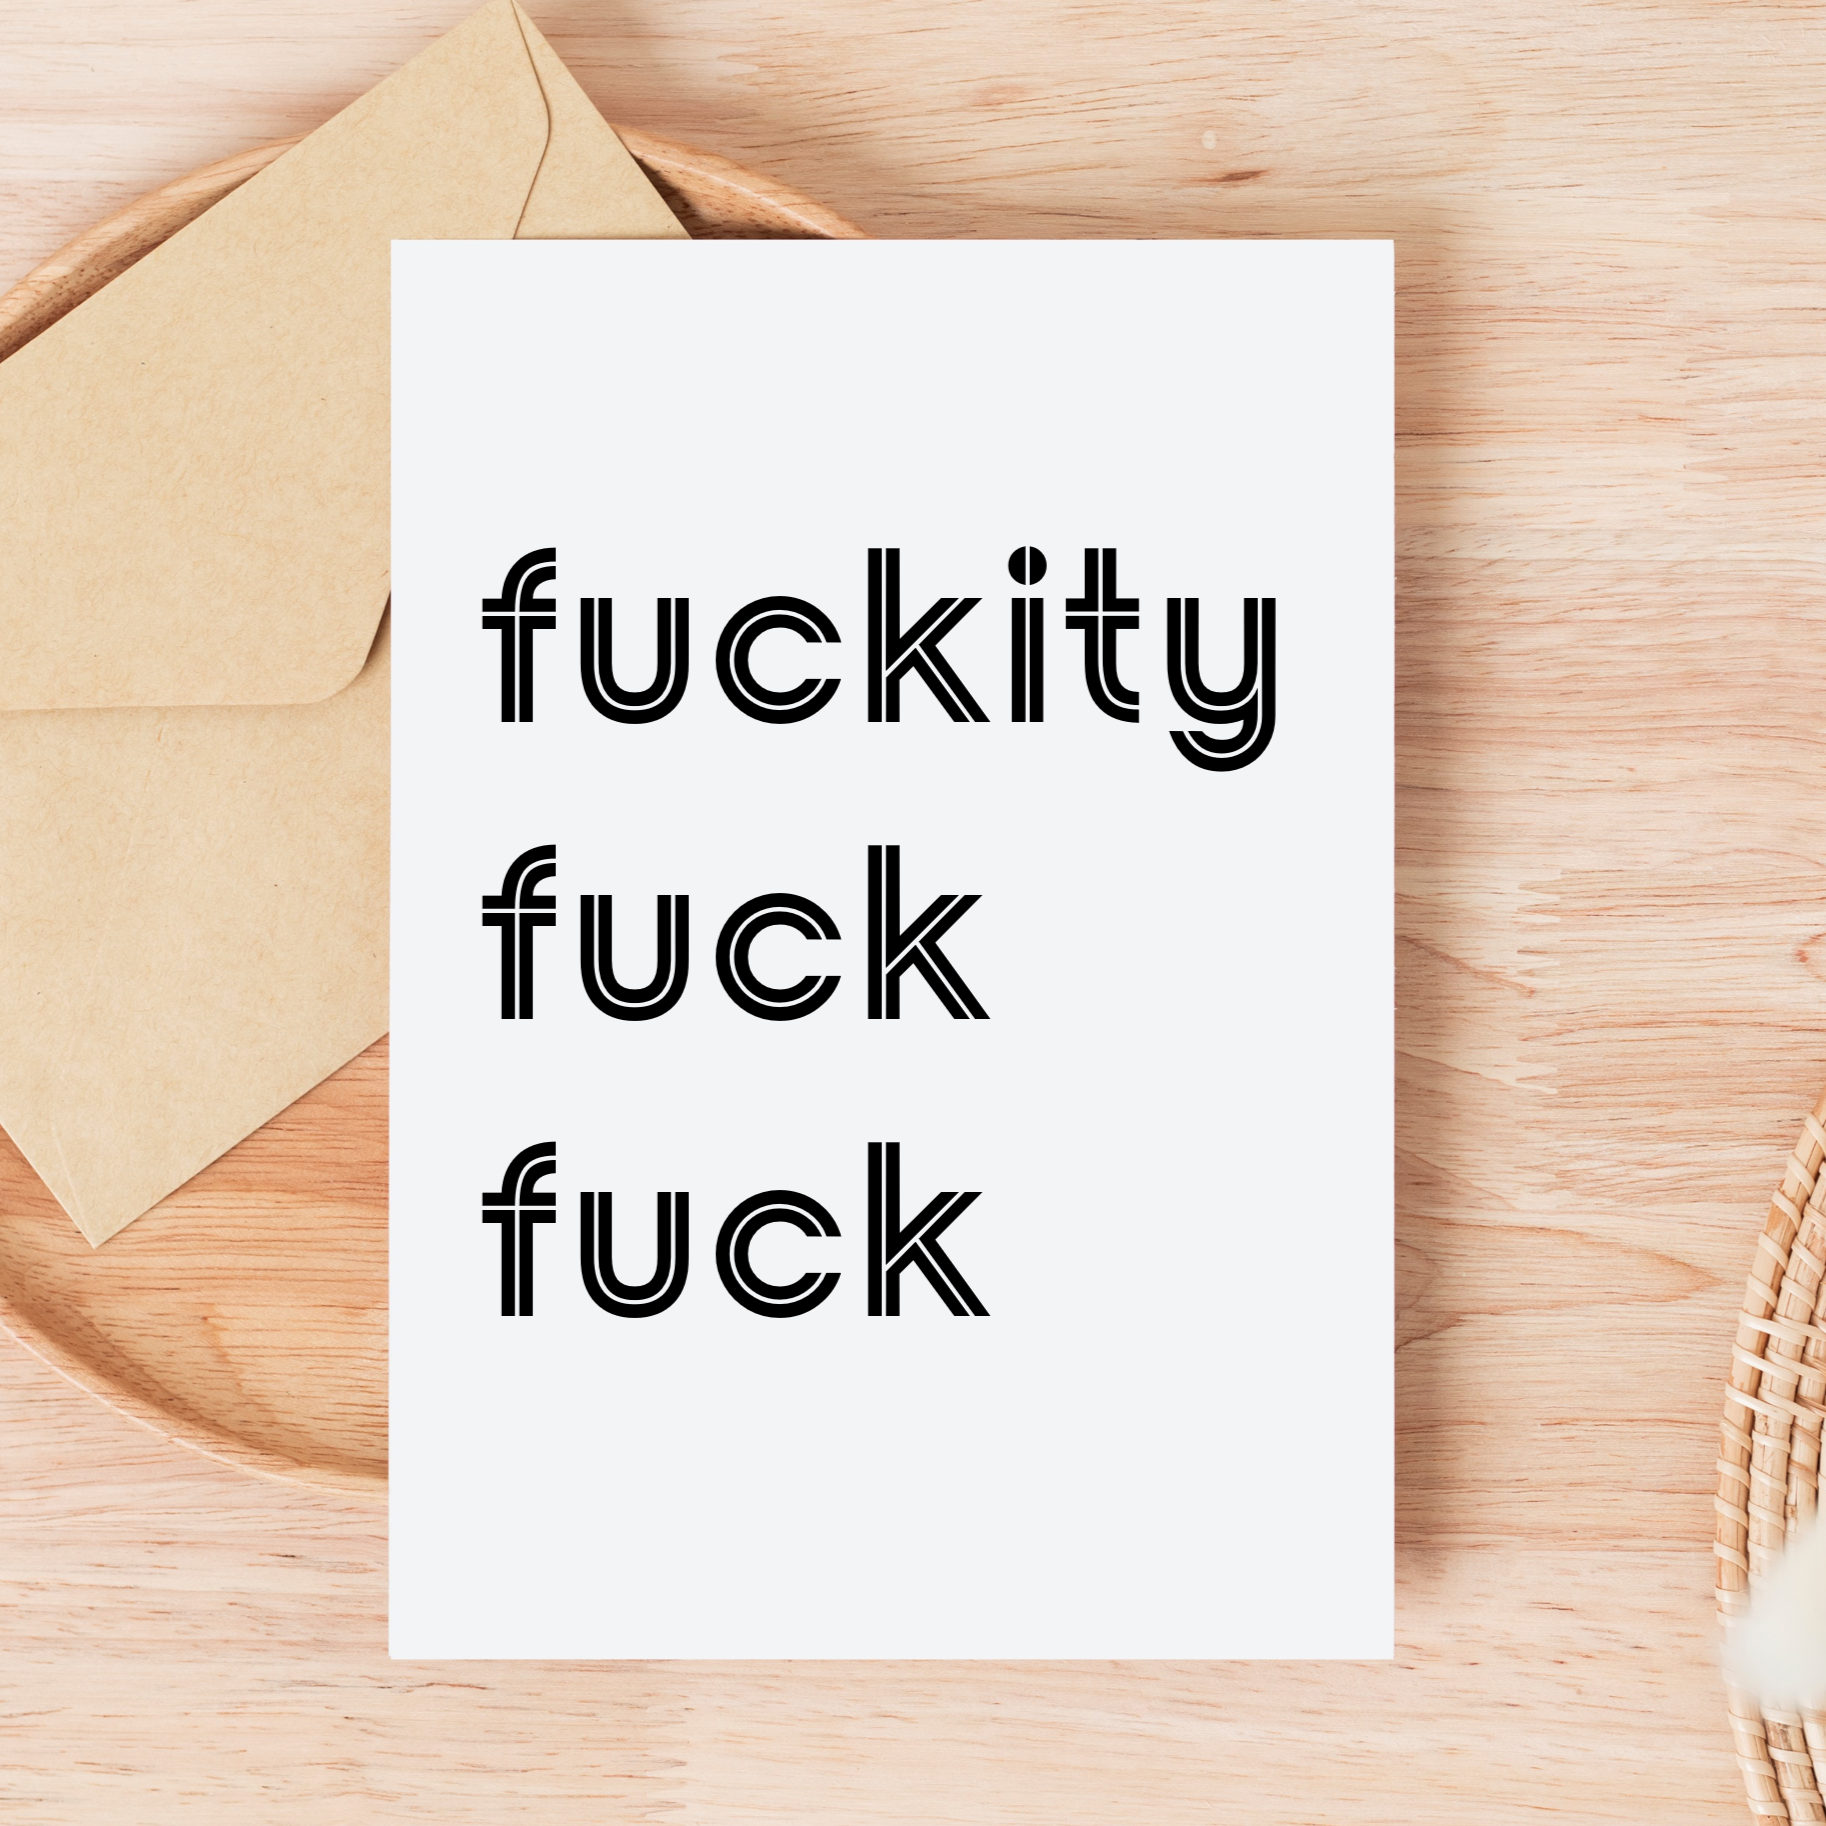 Fuckity Fuck Fuck greeting card